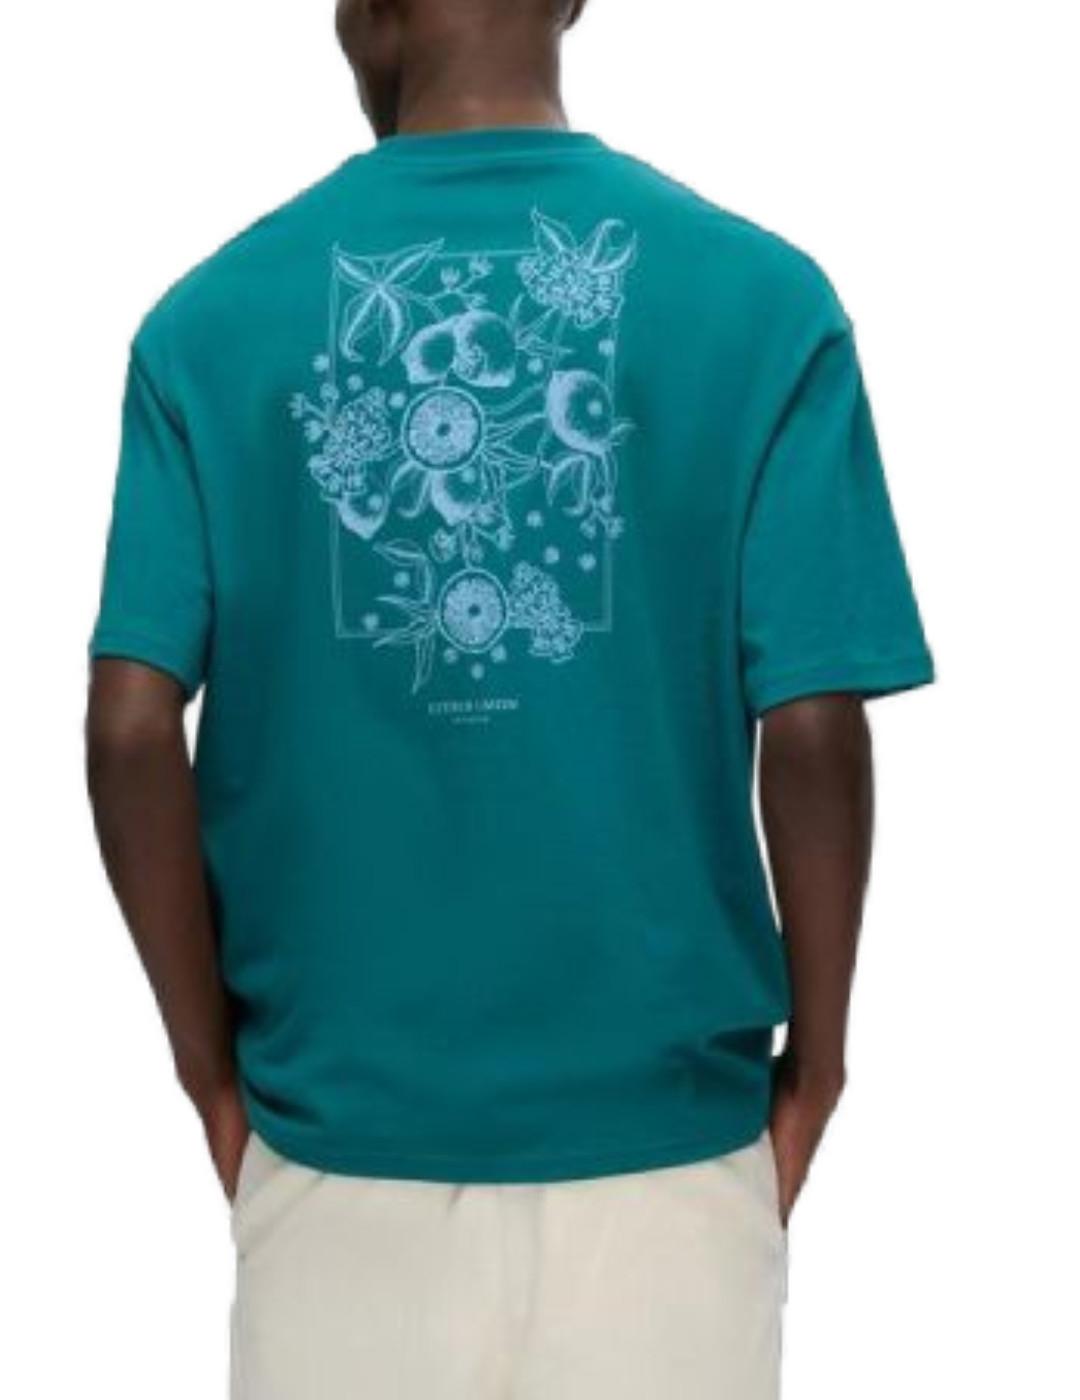 Camiseta Selected Corby azul turquesa manga corta de hombre